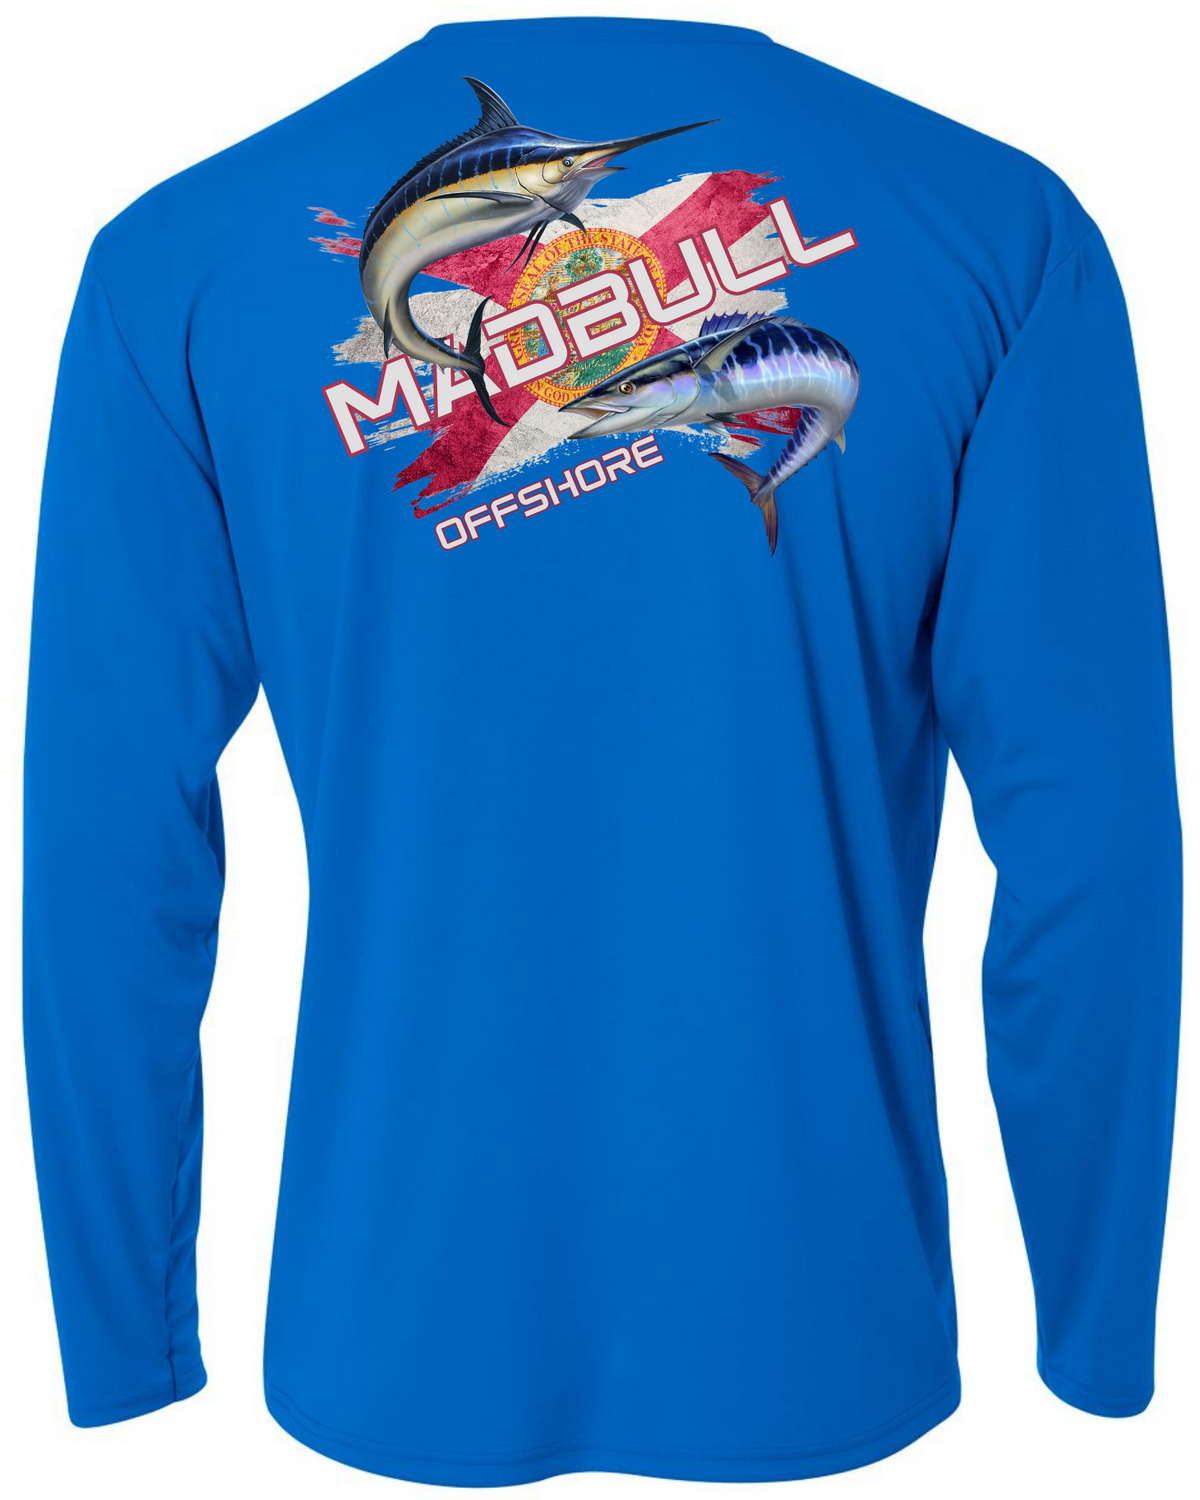 MadBull Florida Anglers Performance Fishing Shirt